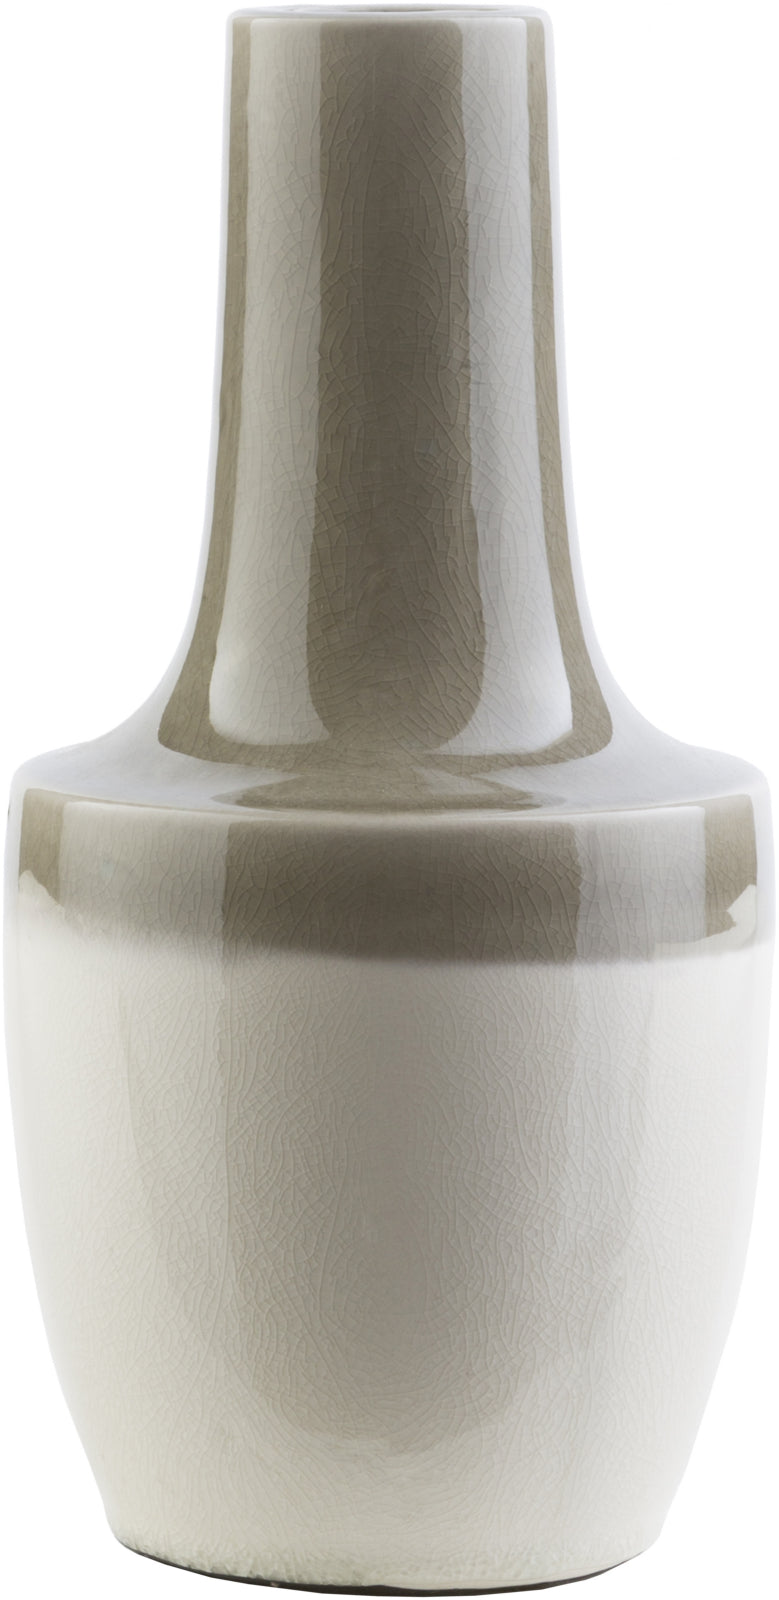 Surya Clayton CLY-672 Olive Ivory Table Vase Medium 5.3 X 5.3 X 10.6 inches